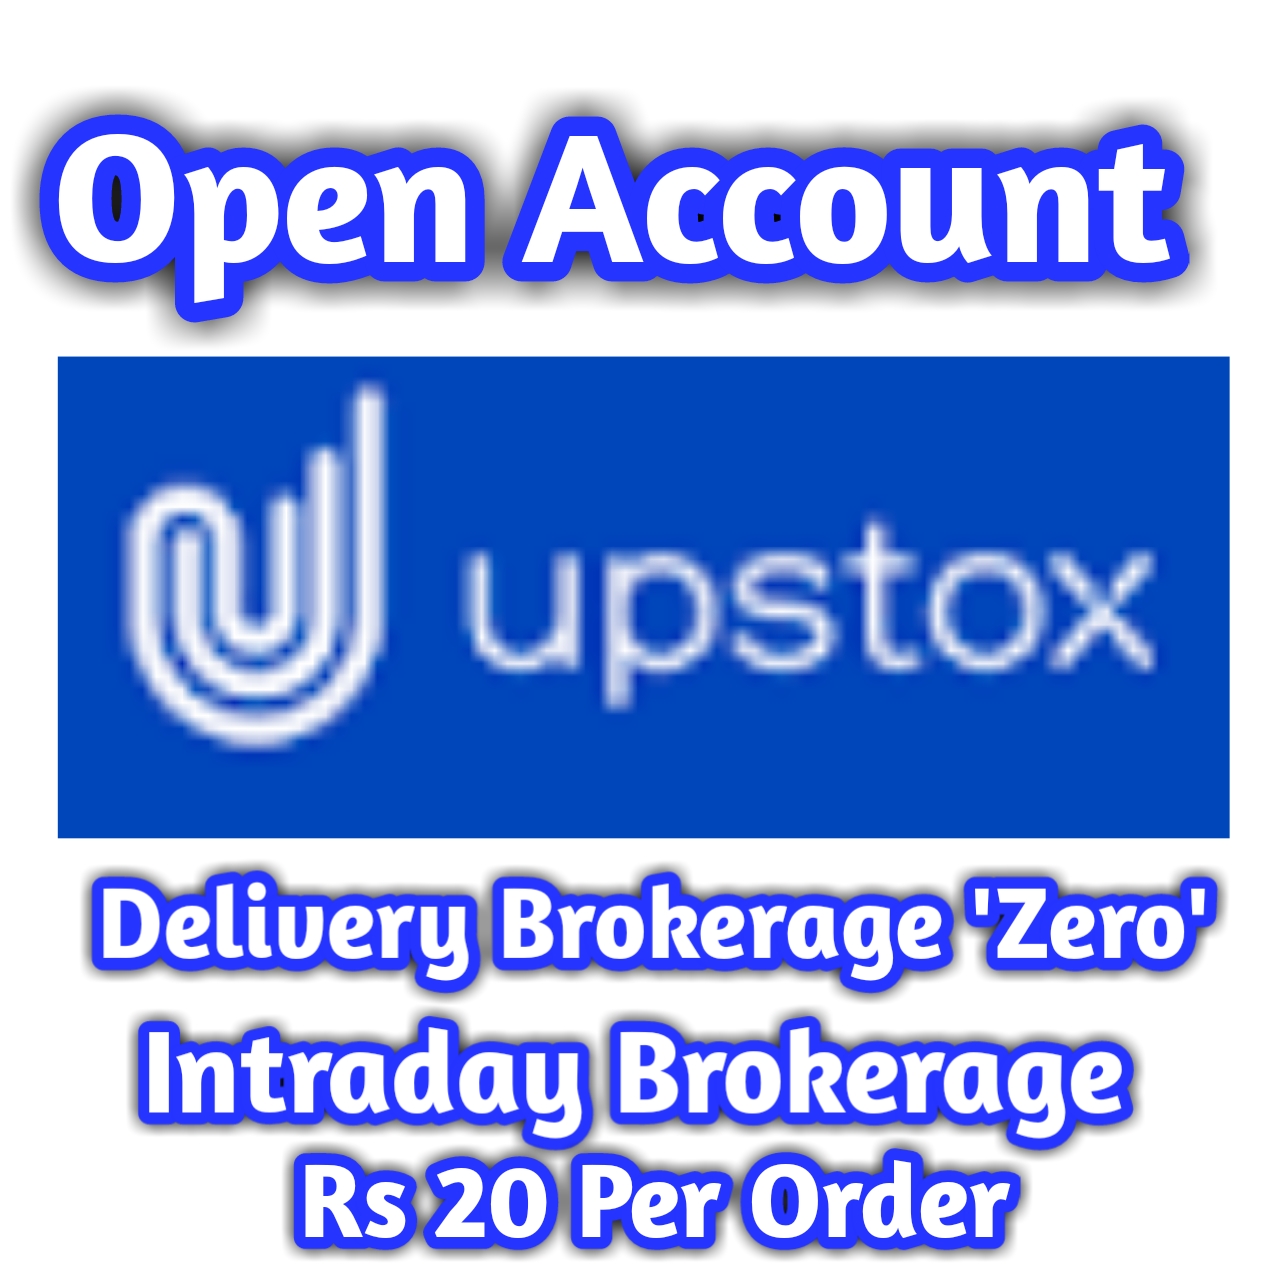 Open Account with Upstox